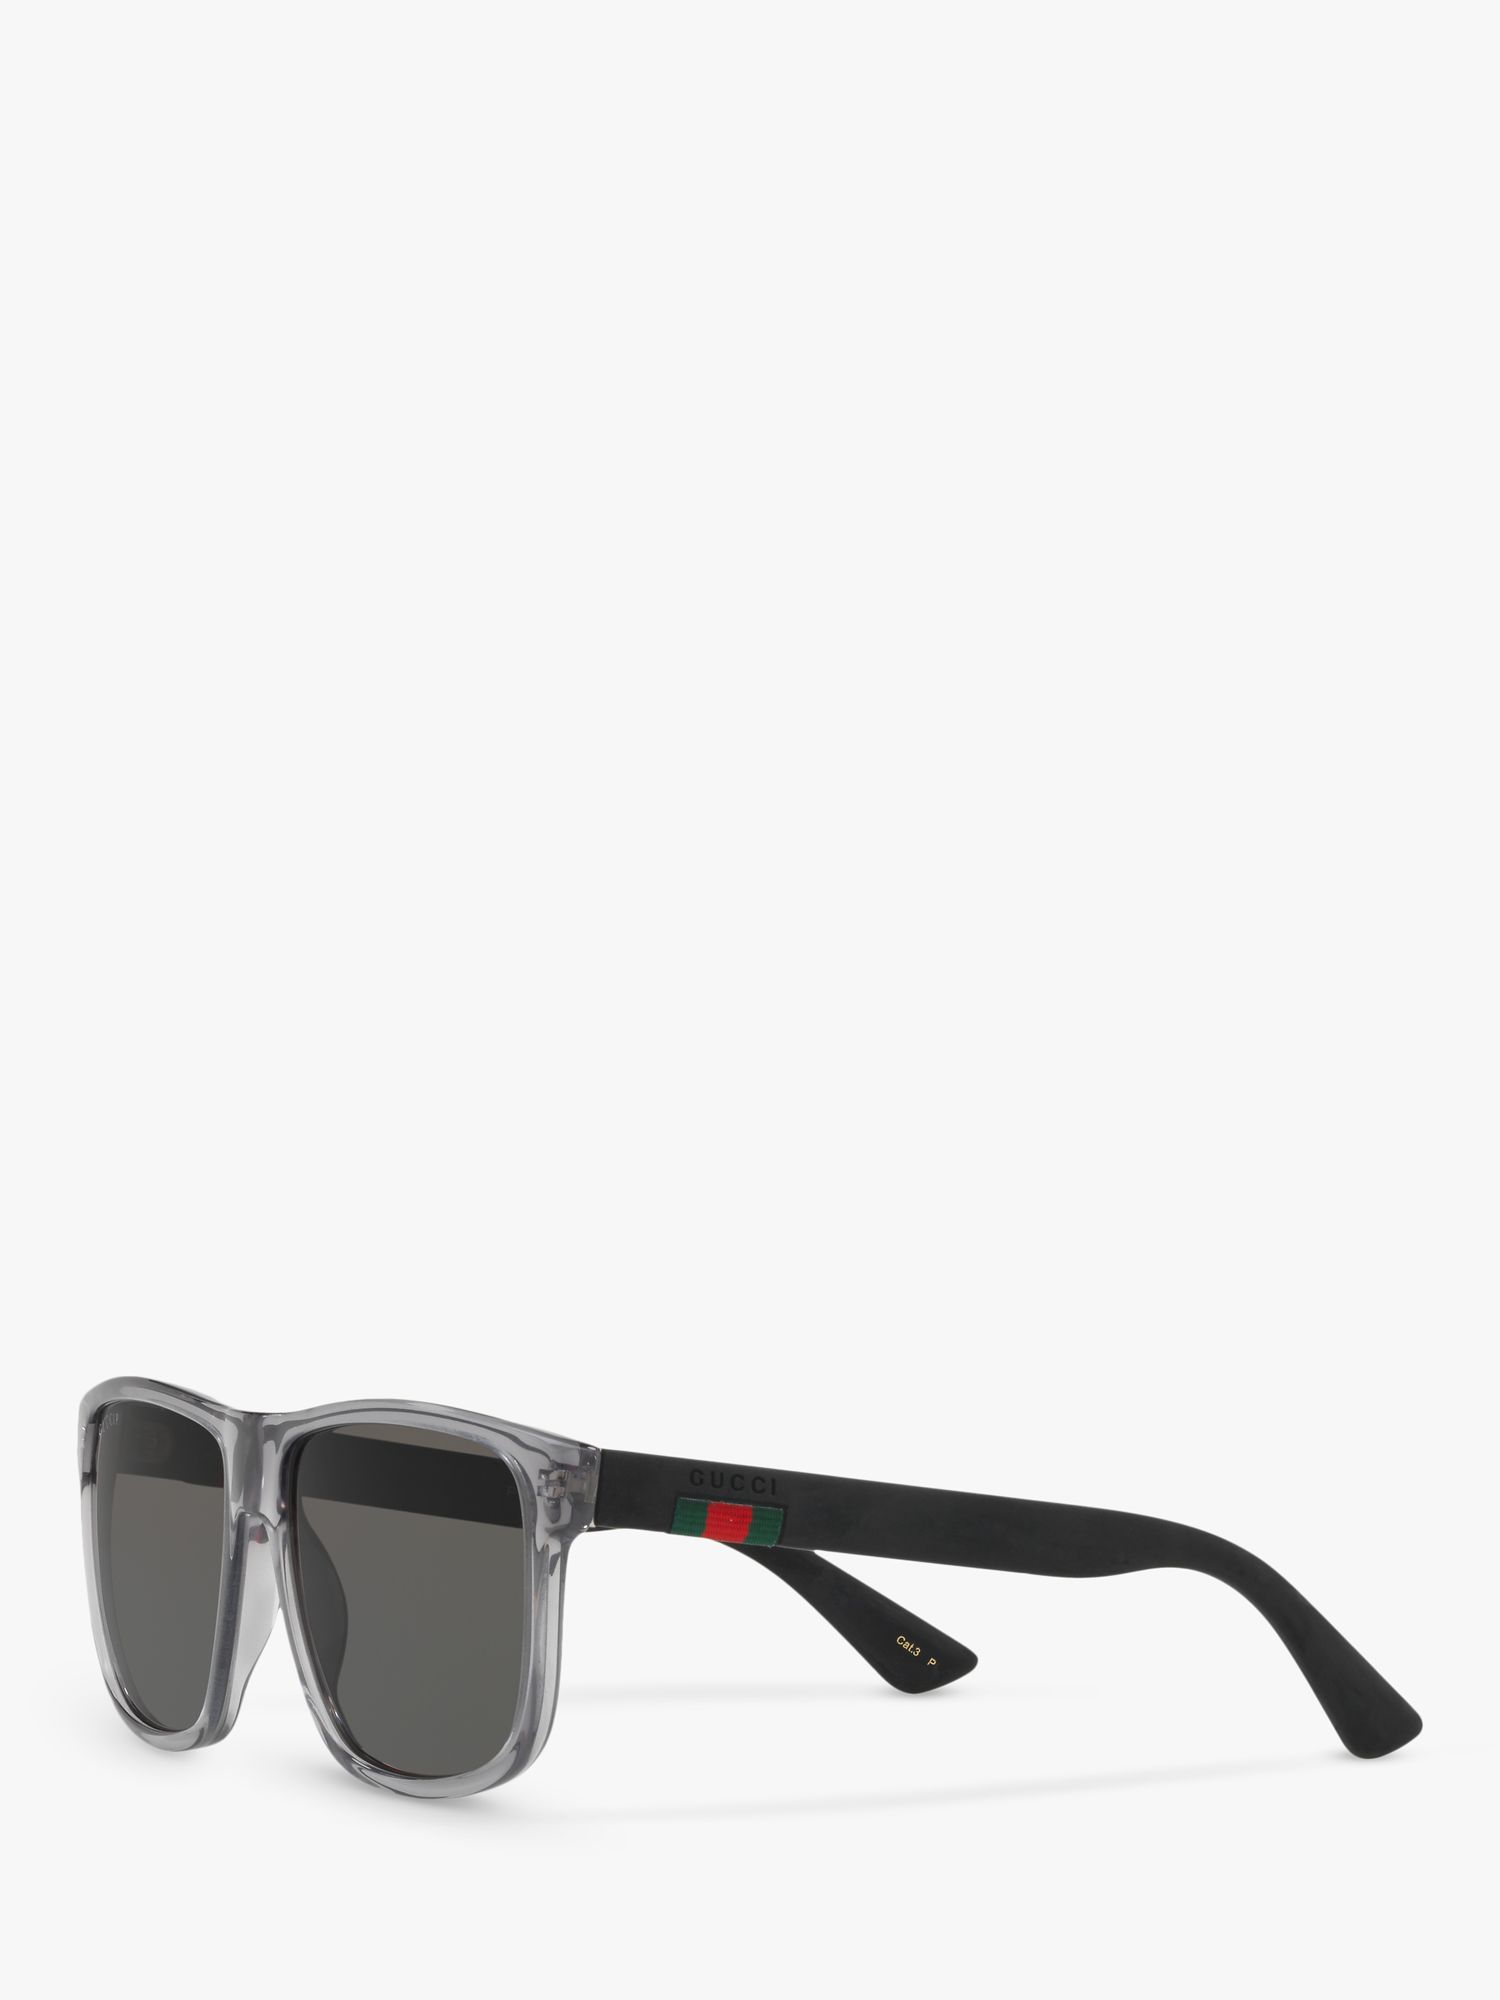 Ny mening til bundet kål Gucci GG0010S Polarised D-Frame Sunglasses, Charcoal/Grey at John Lewis &  Partners